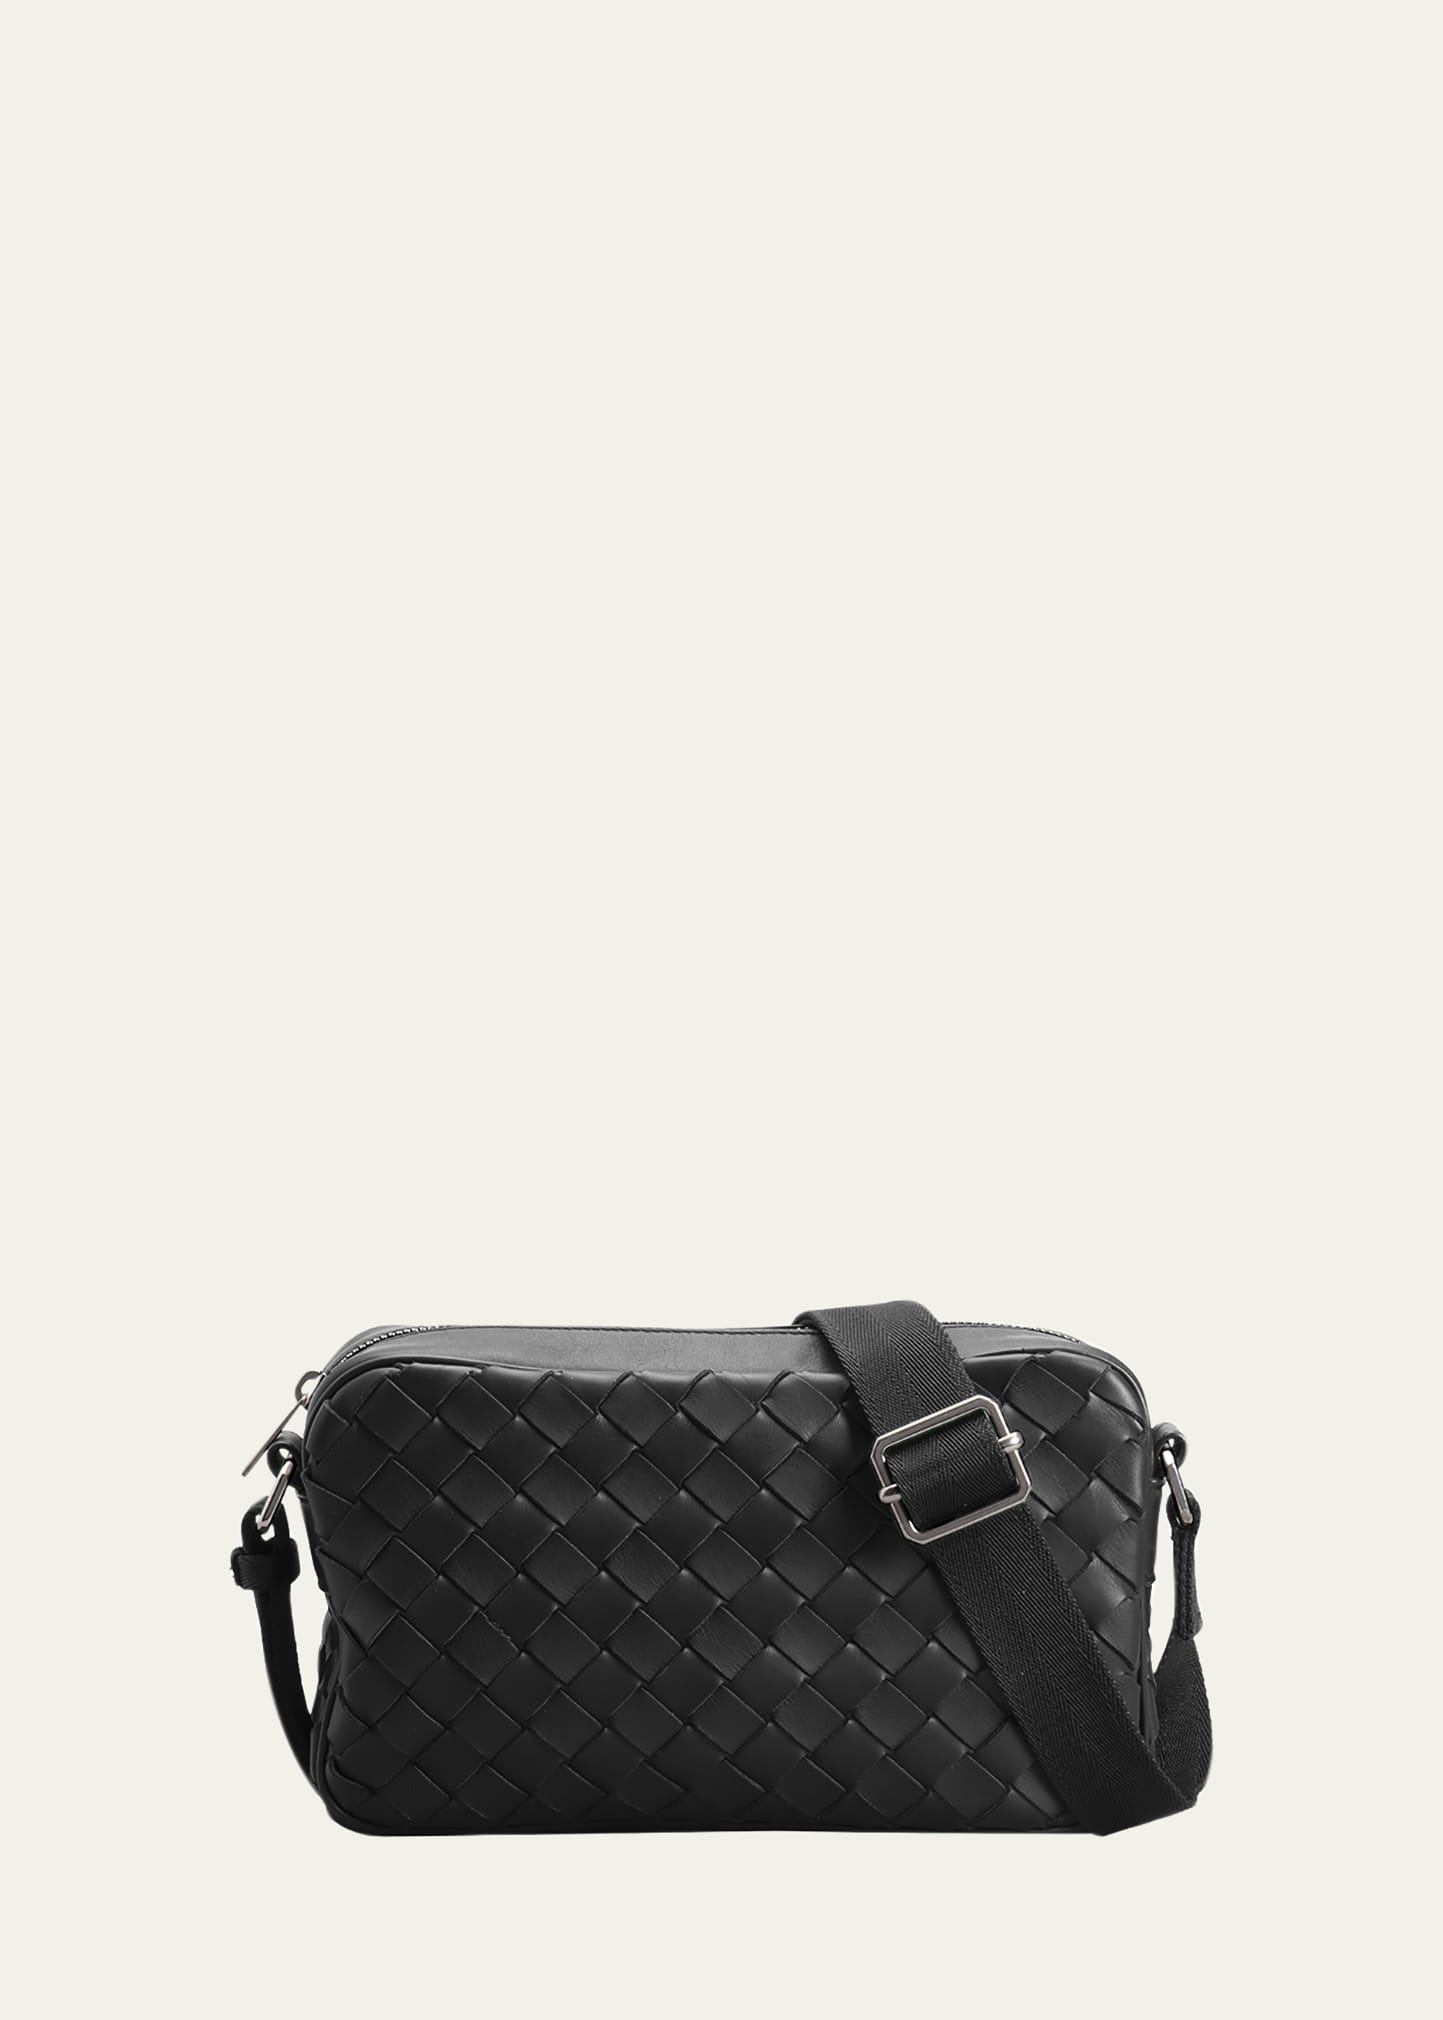 Bottega Veneta Men's Abstract Leather Bag